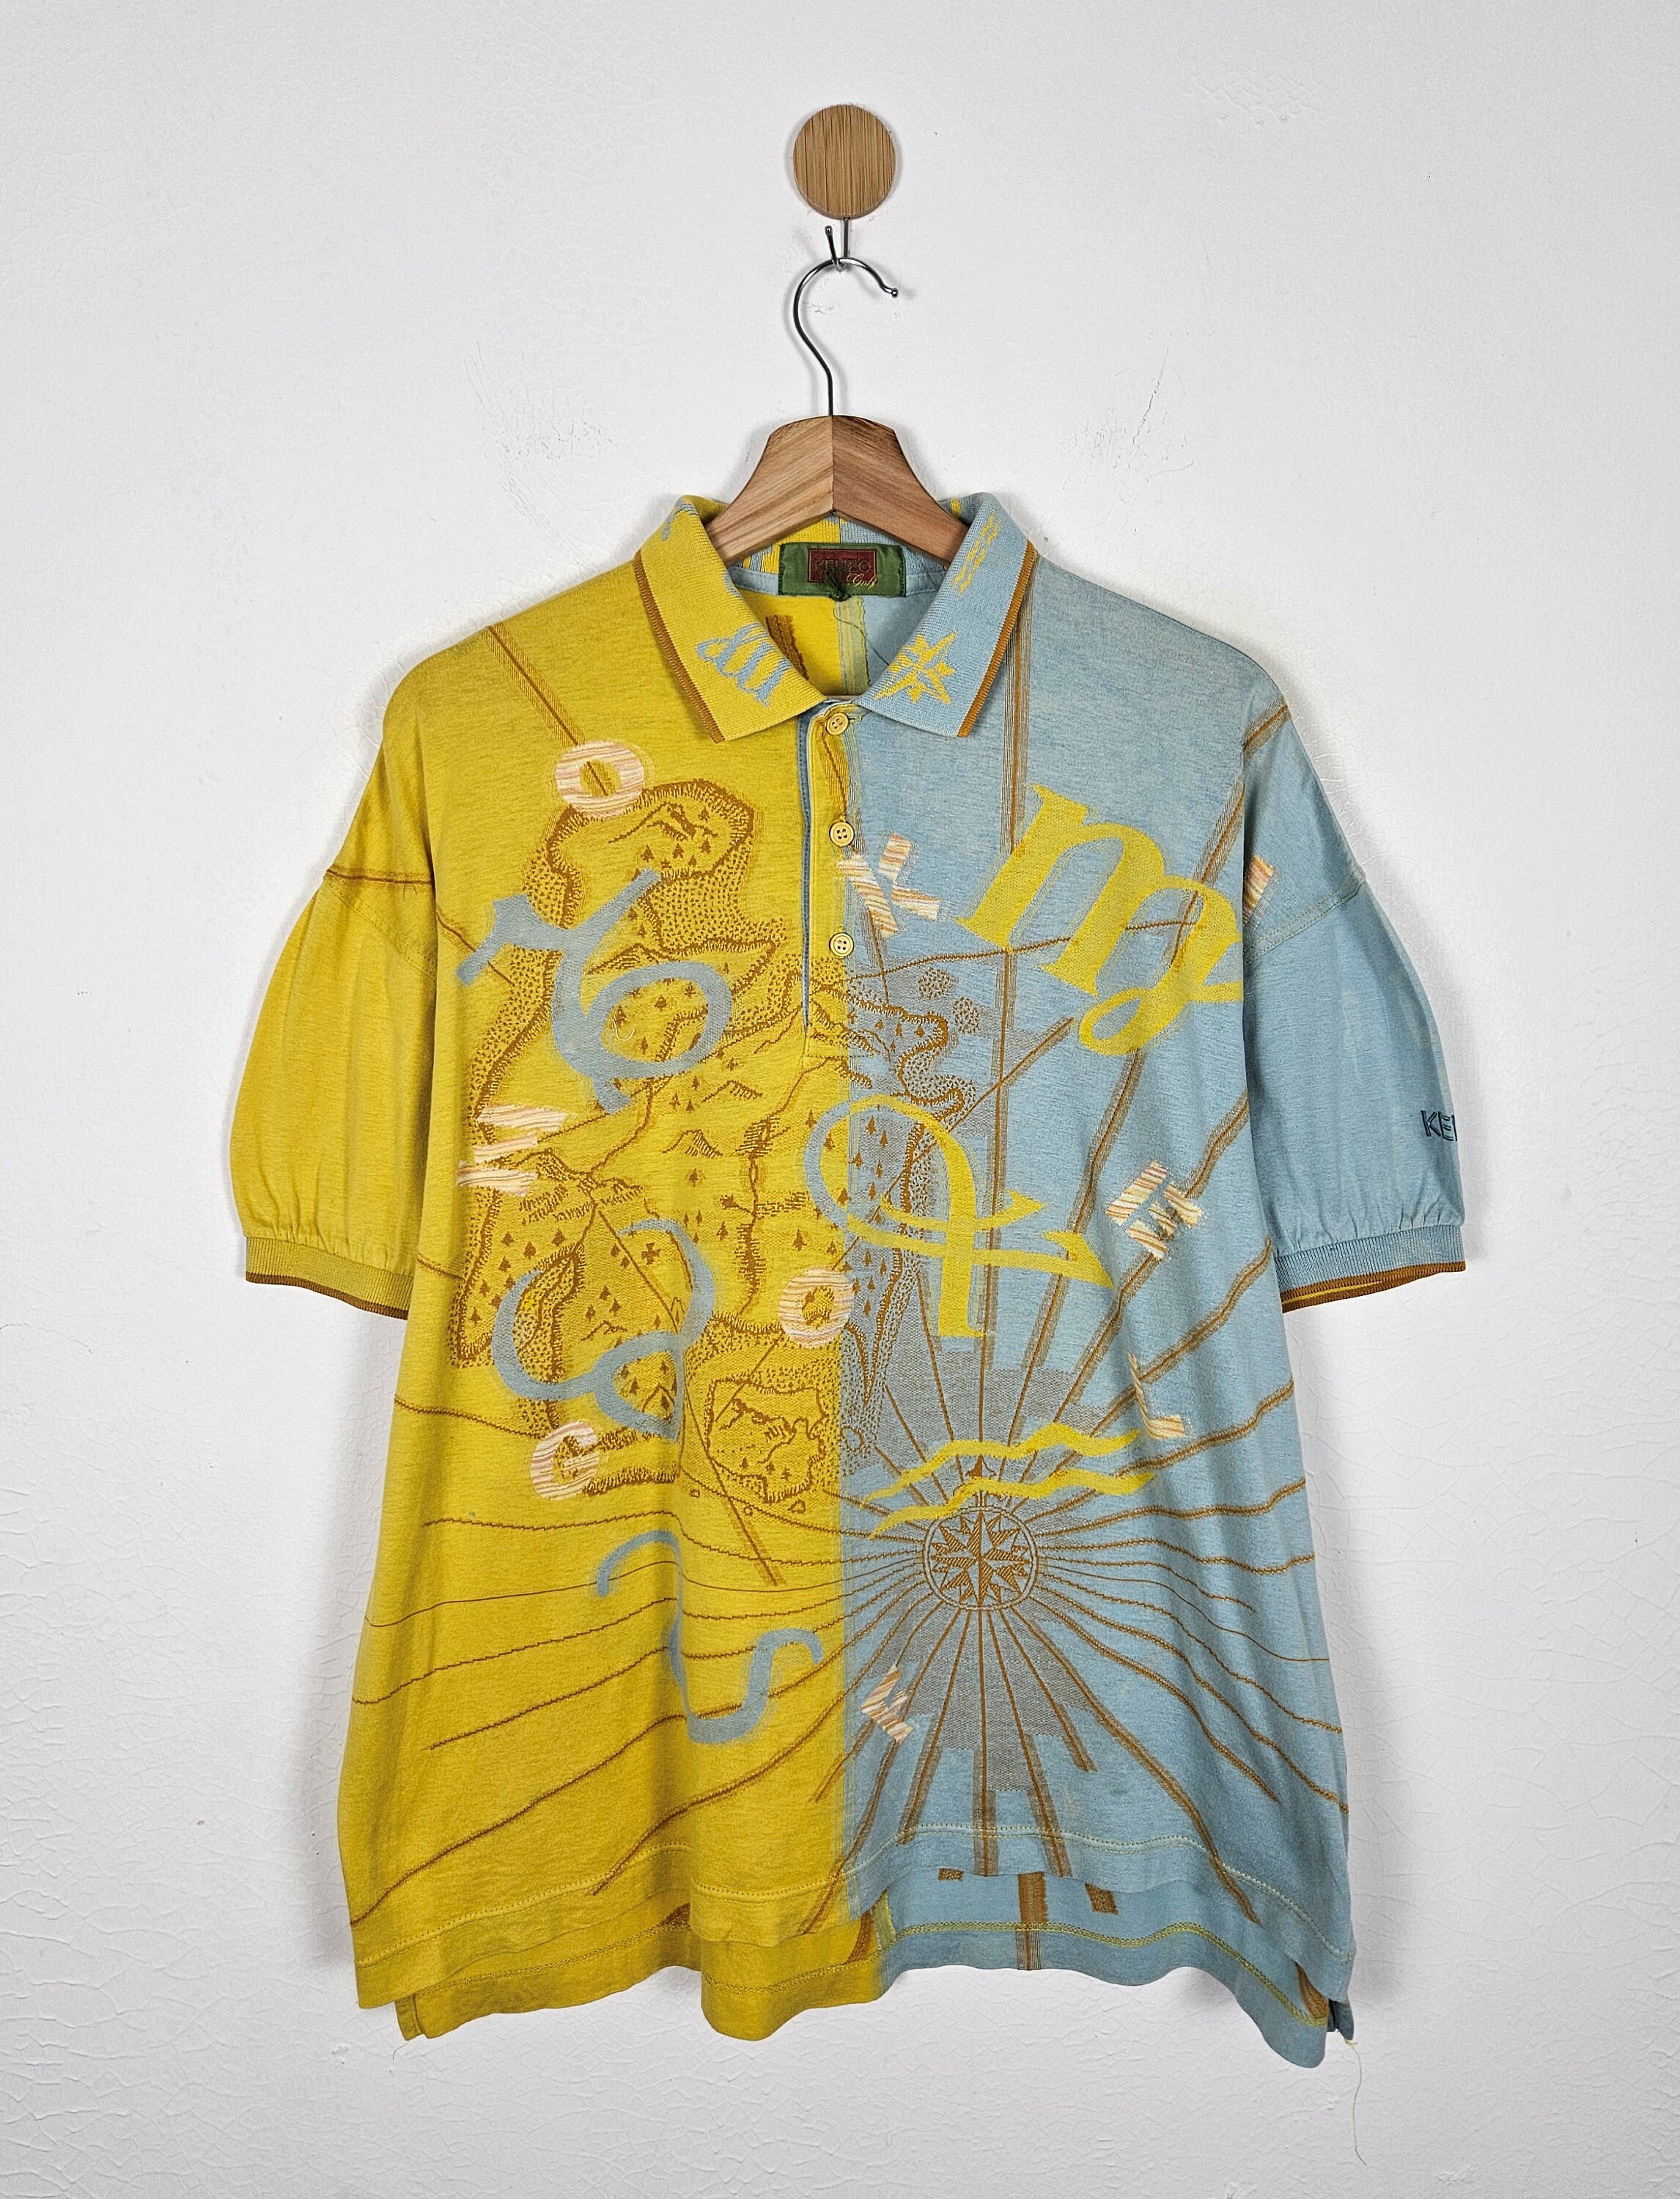 DakotaVintageStore Kenzo Golf Spellout Embroidery Half Zipper Shirt Polo